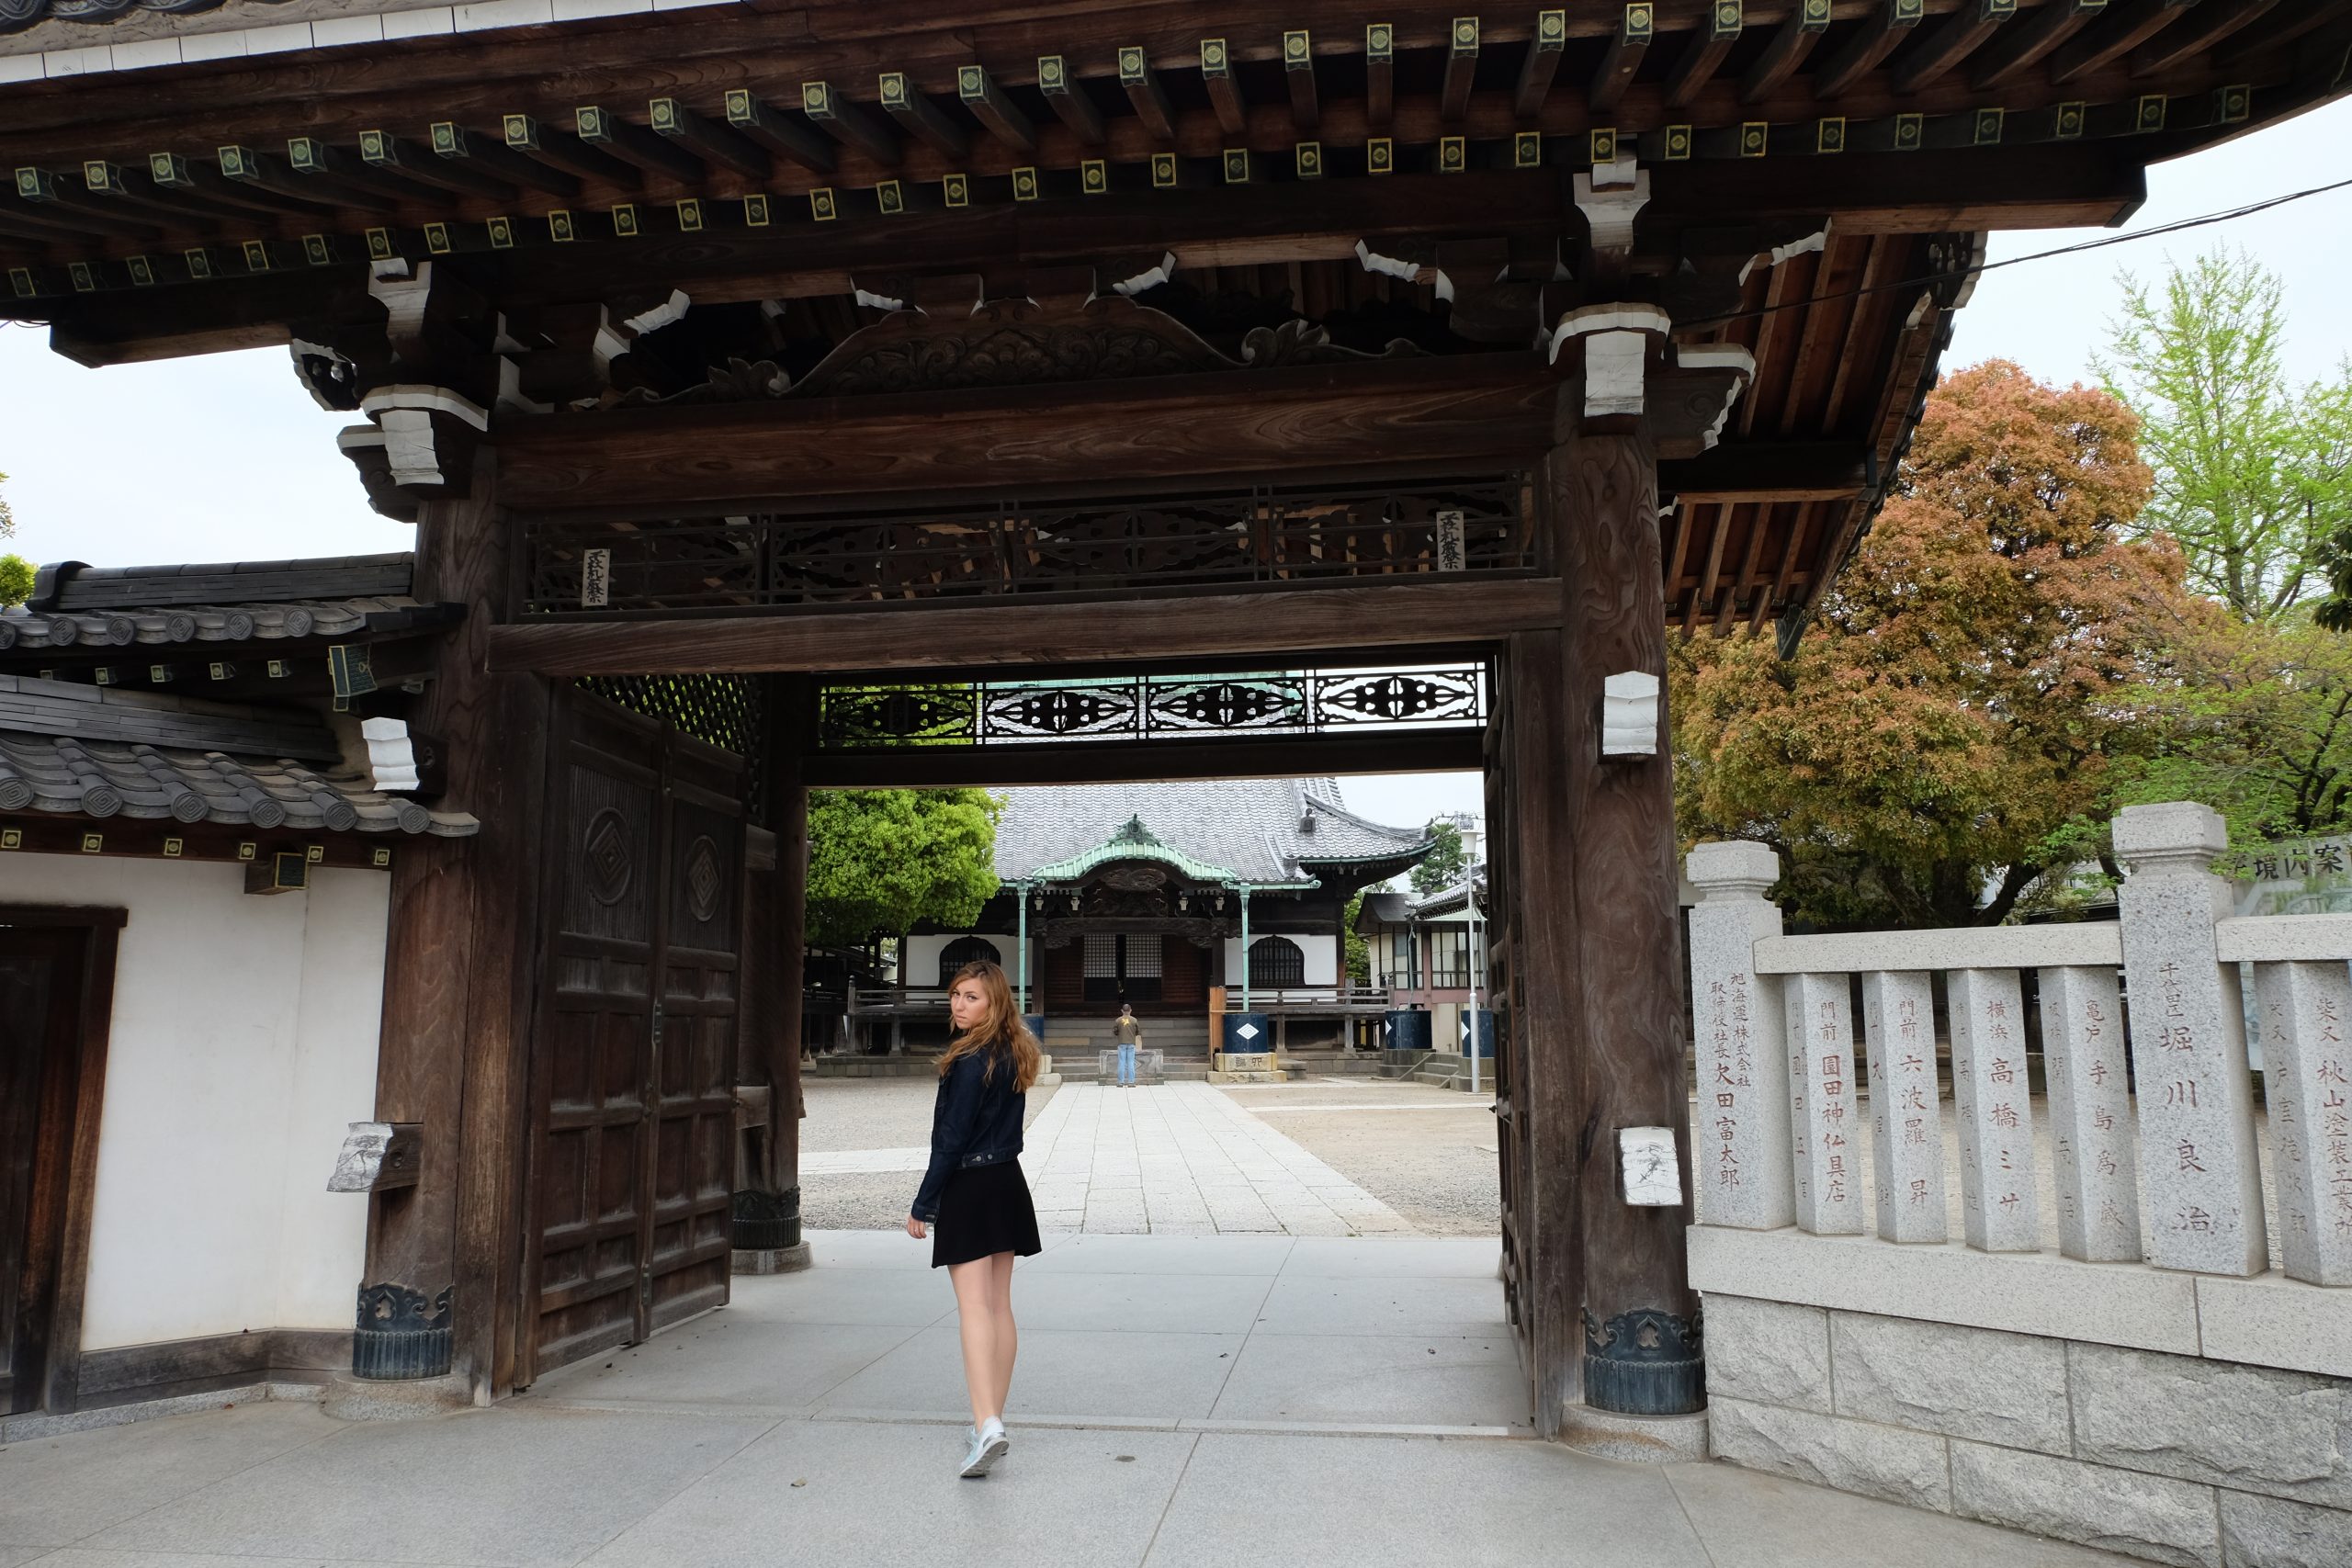 Cory entering the Taishakuten Temple in Shibamata Japan